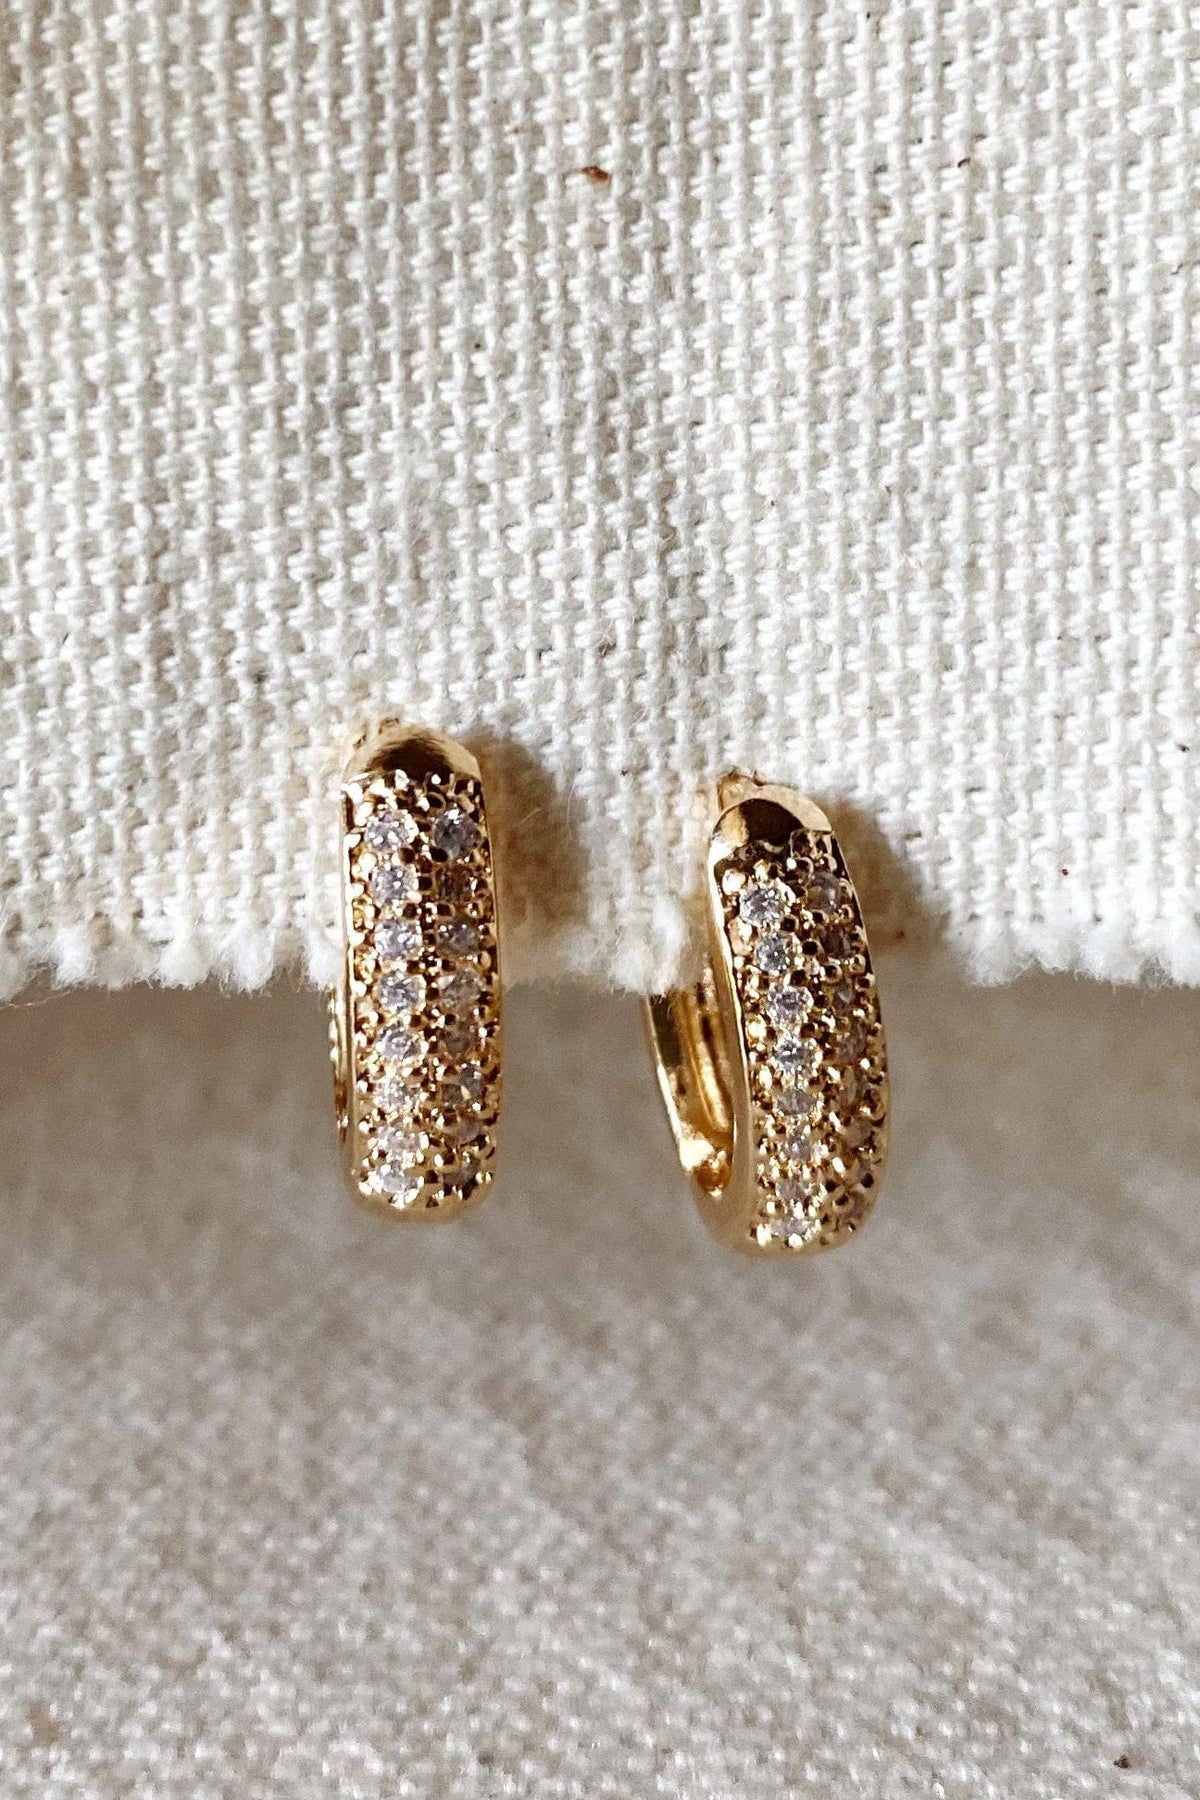 Sheva 18k Gold Filled Oval Hoop Earrings - Earrings - Blooming Daily